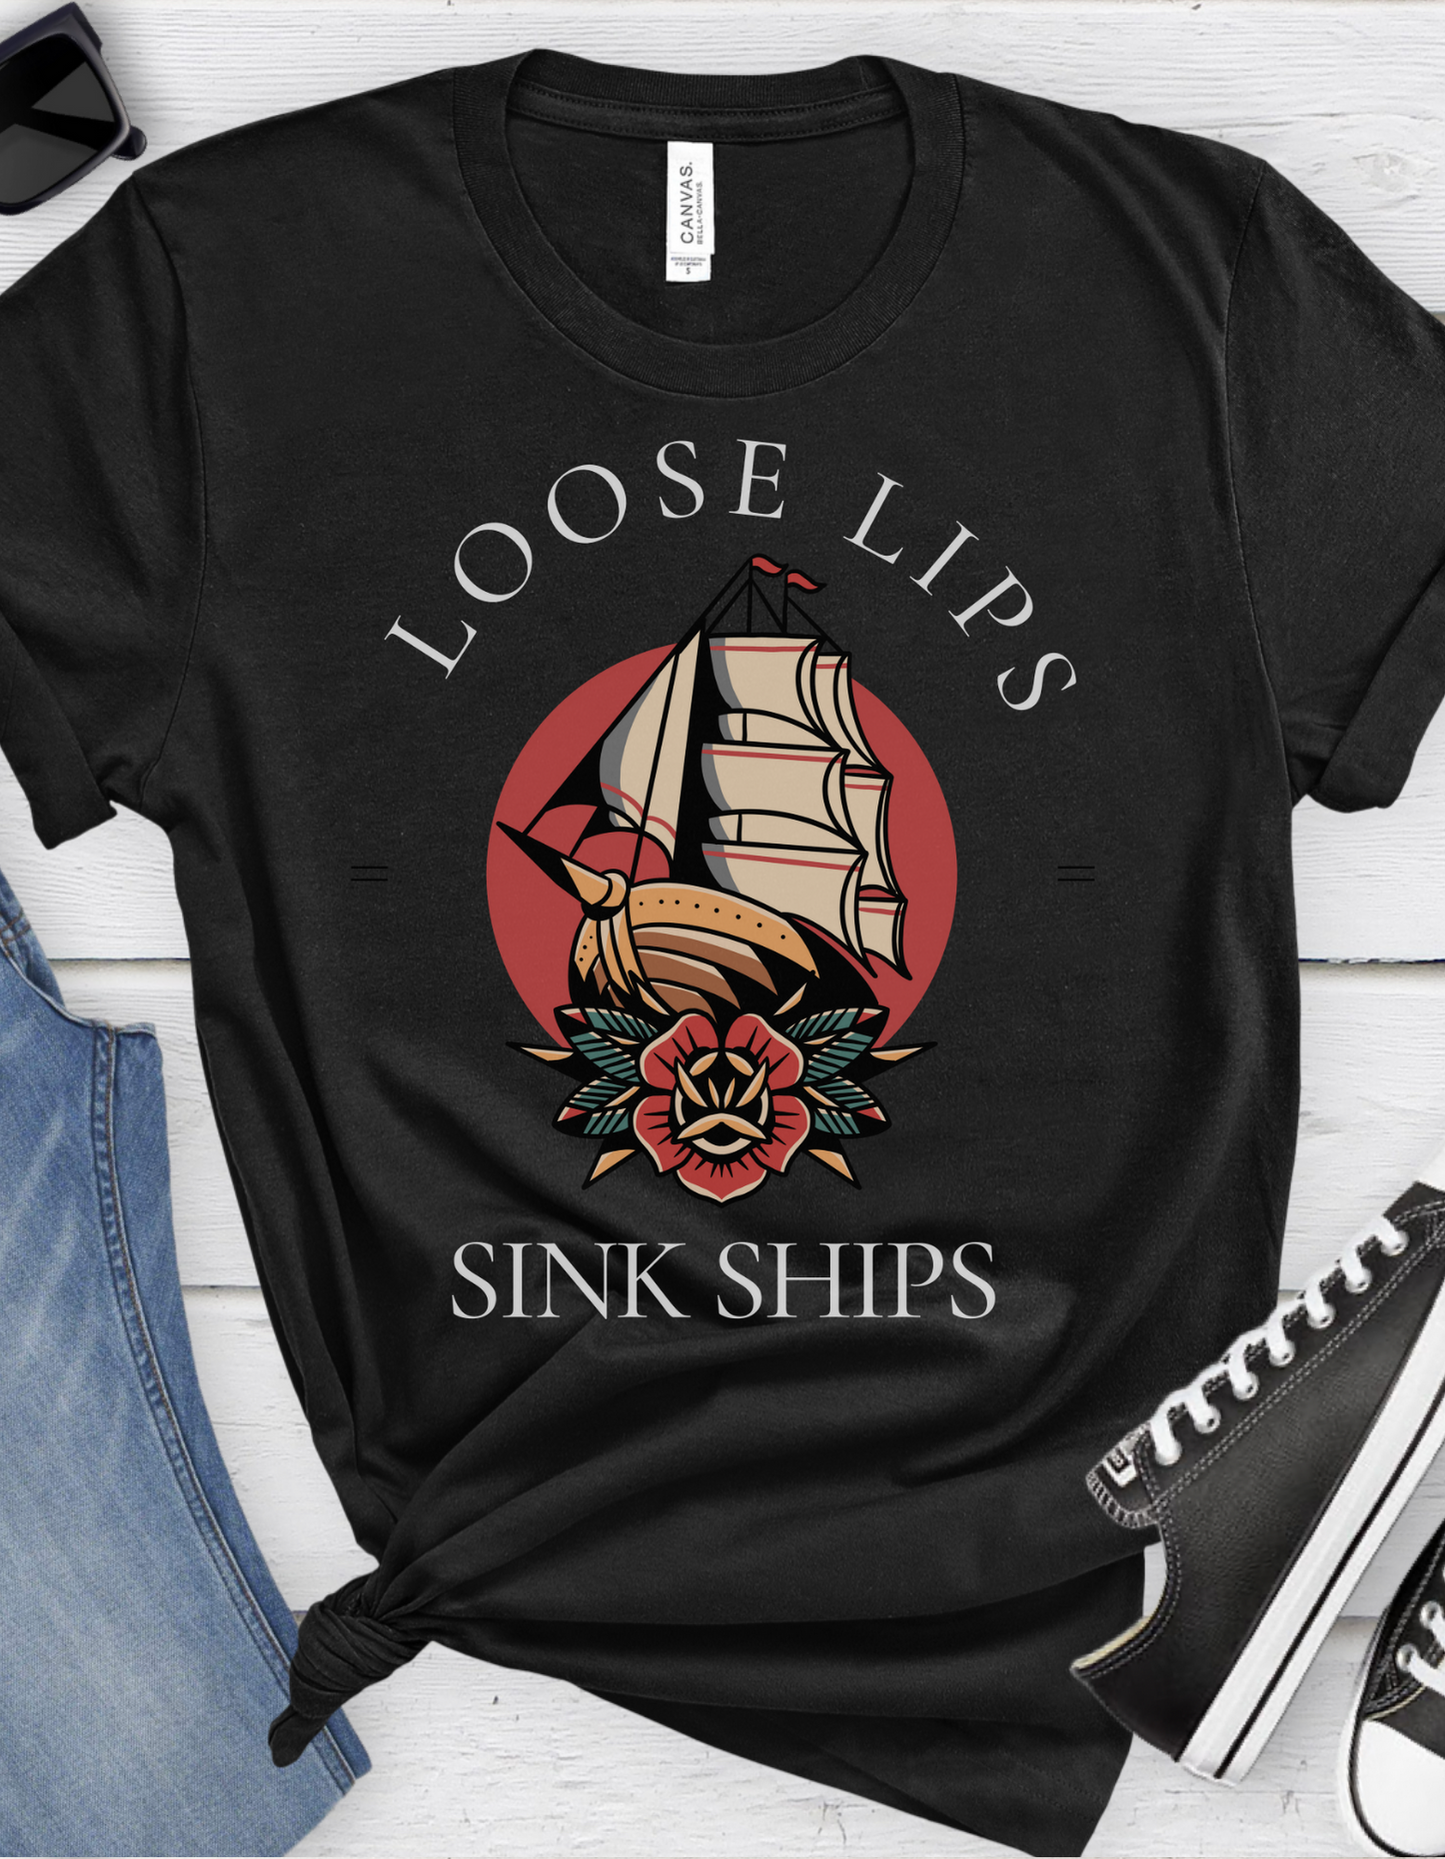 Loose Lips Sink Ships Tattoo T-shirt / Traditional Tattoo Tee Shirt / Punk Rock Clothing Tshirt Rockabilly Psychobilly Freak Goth - Foxlark Crystal Jewelry